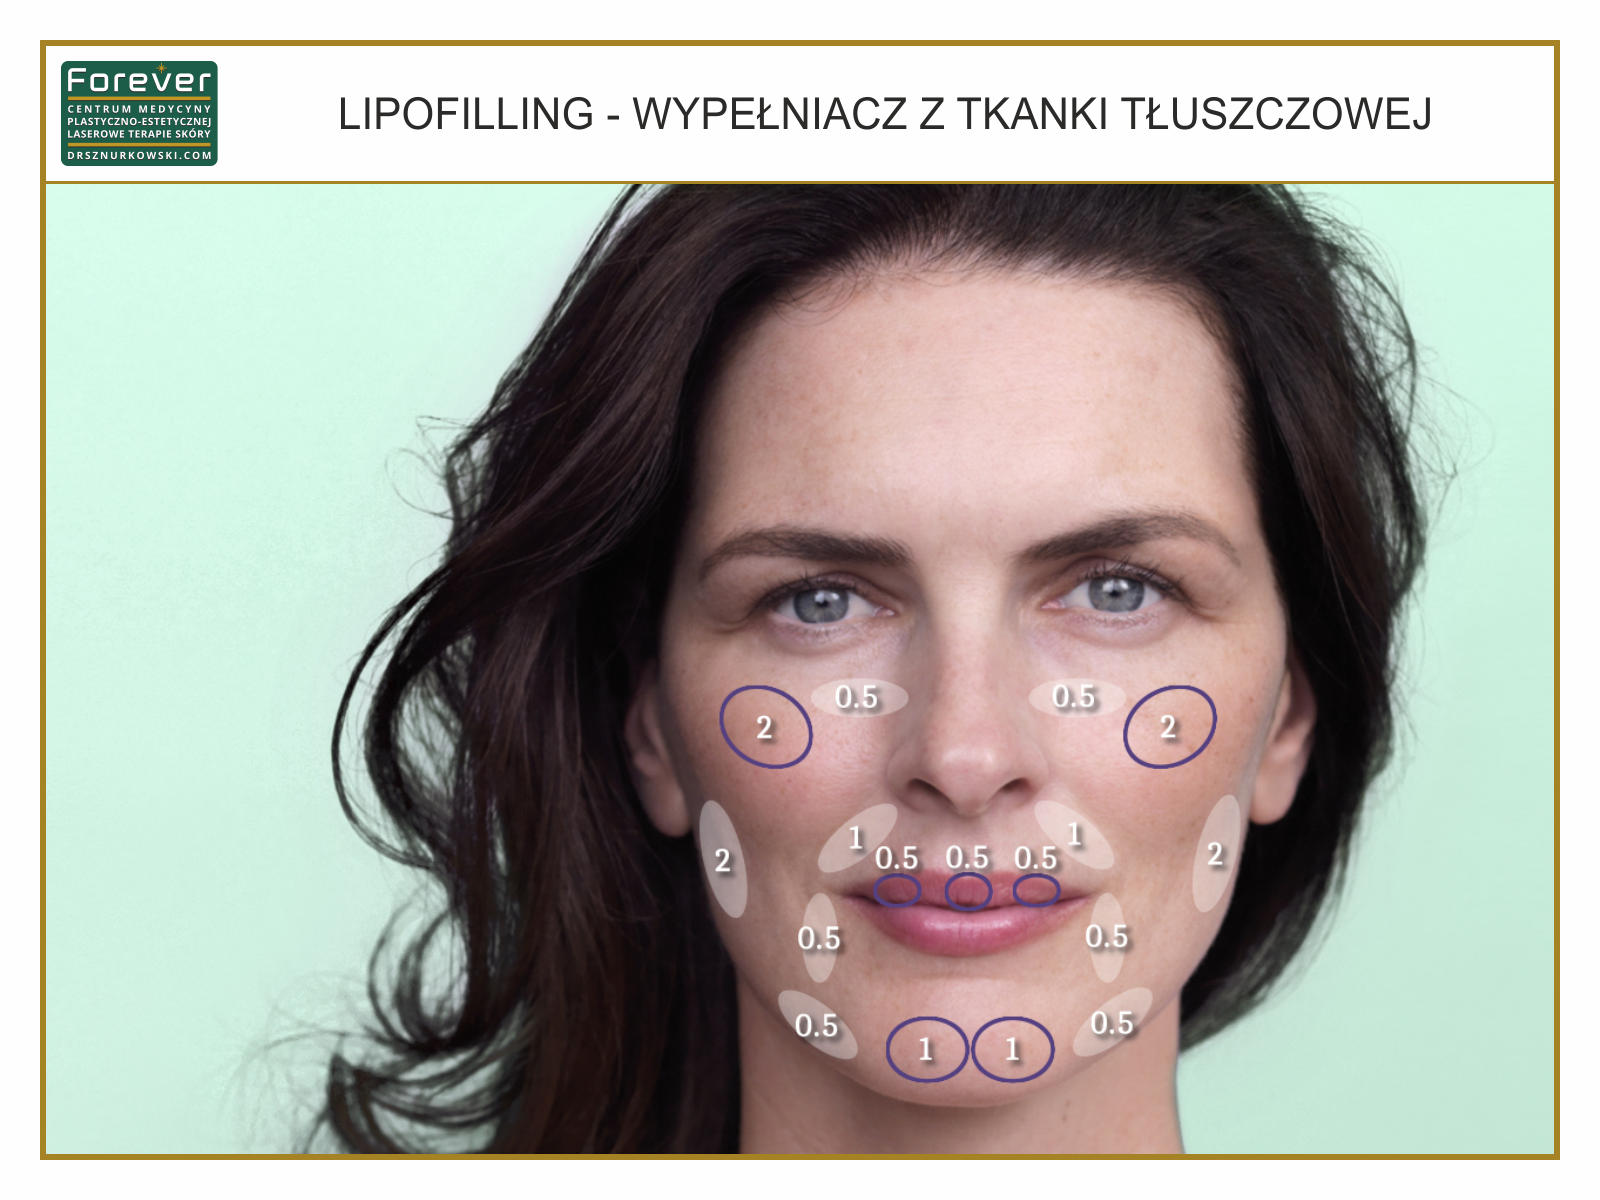 Lipofilling - Facial Filling With Fat (80x60) PL.jpg